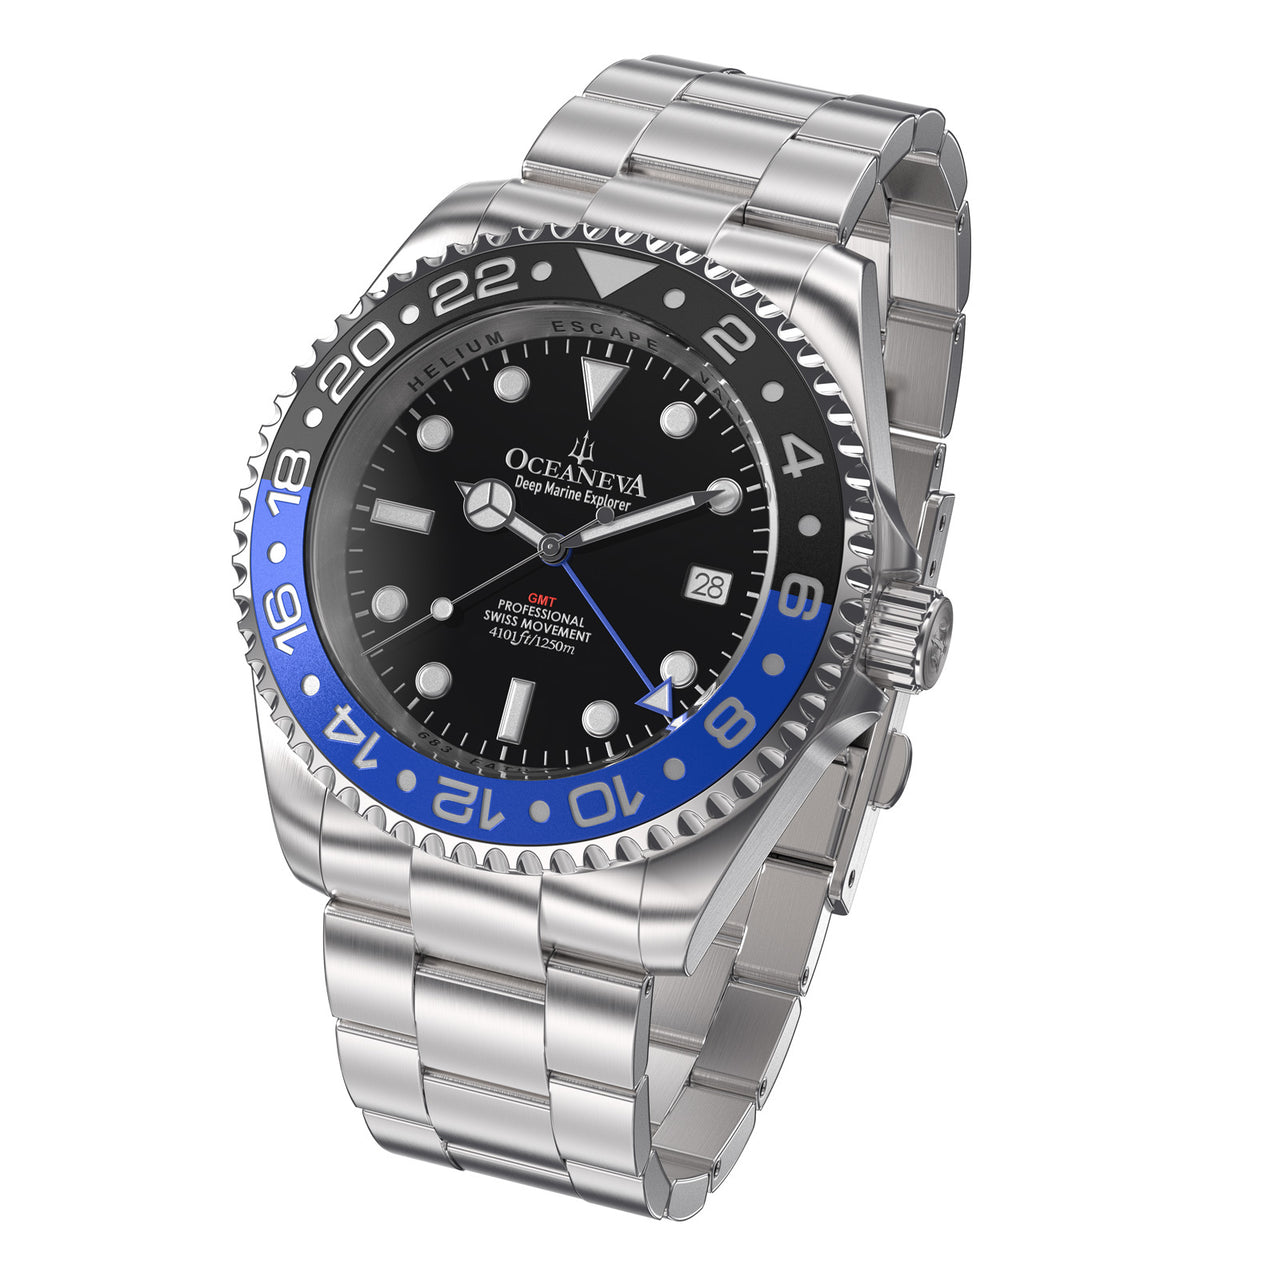 Oceaneva 1250M GMT Dive Watch Blue And Black Front Picture Slight Left Slant View